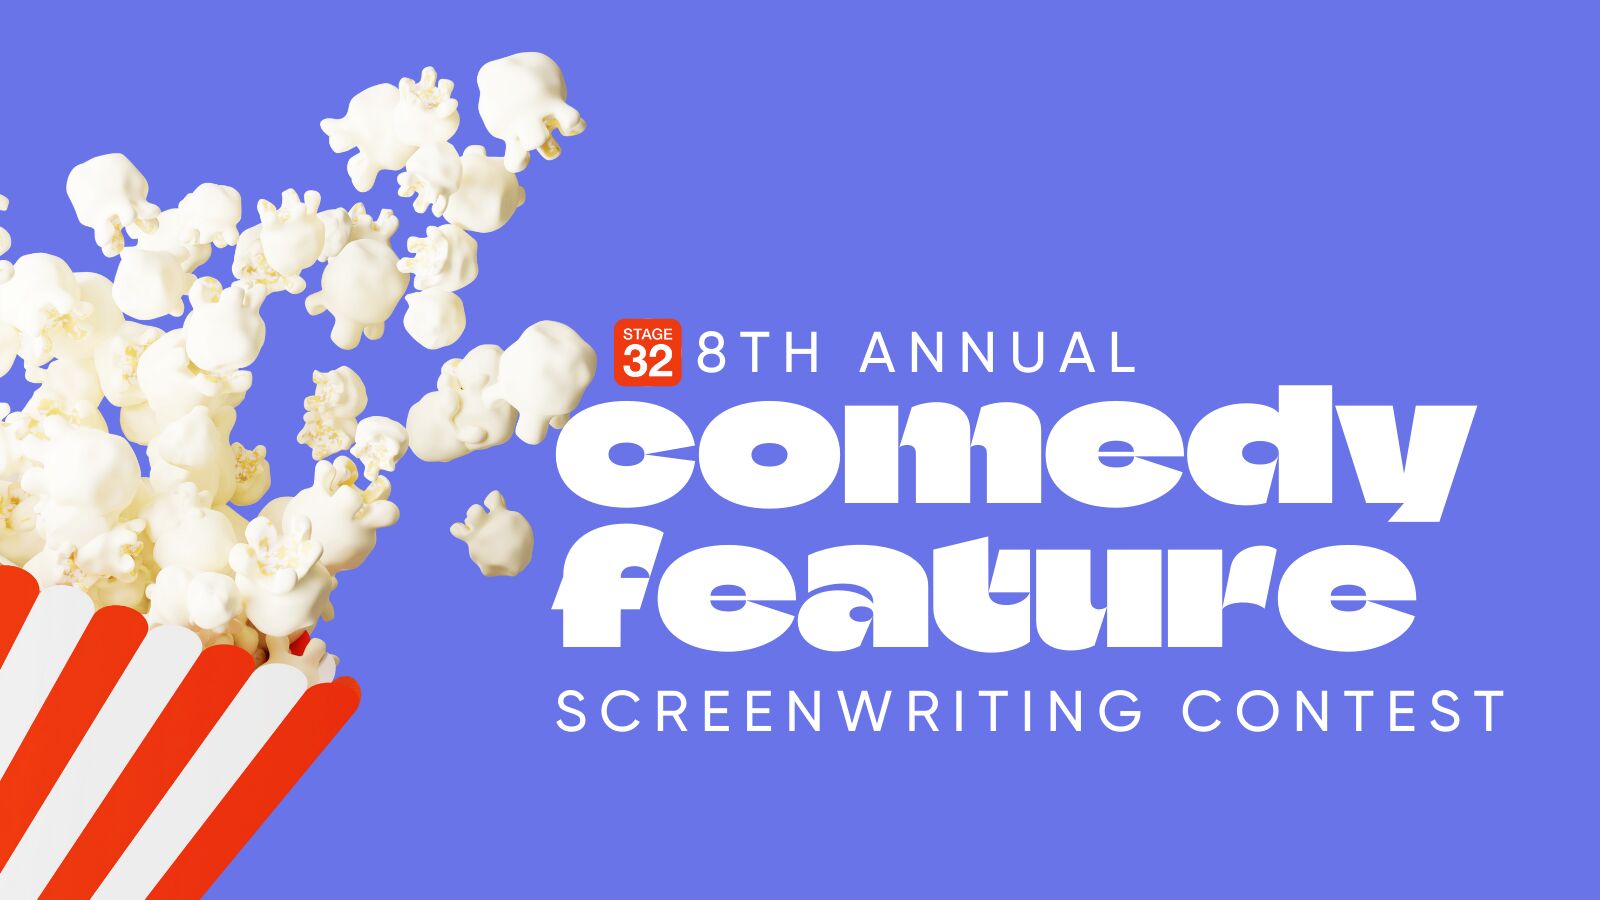 8th Annual Feature Comedy Screenwriting Contest